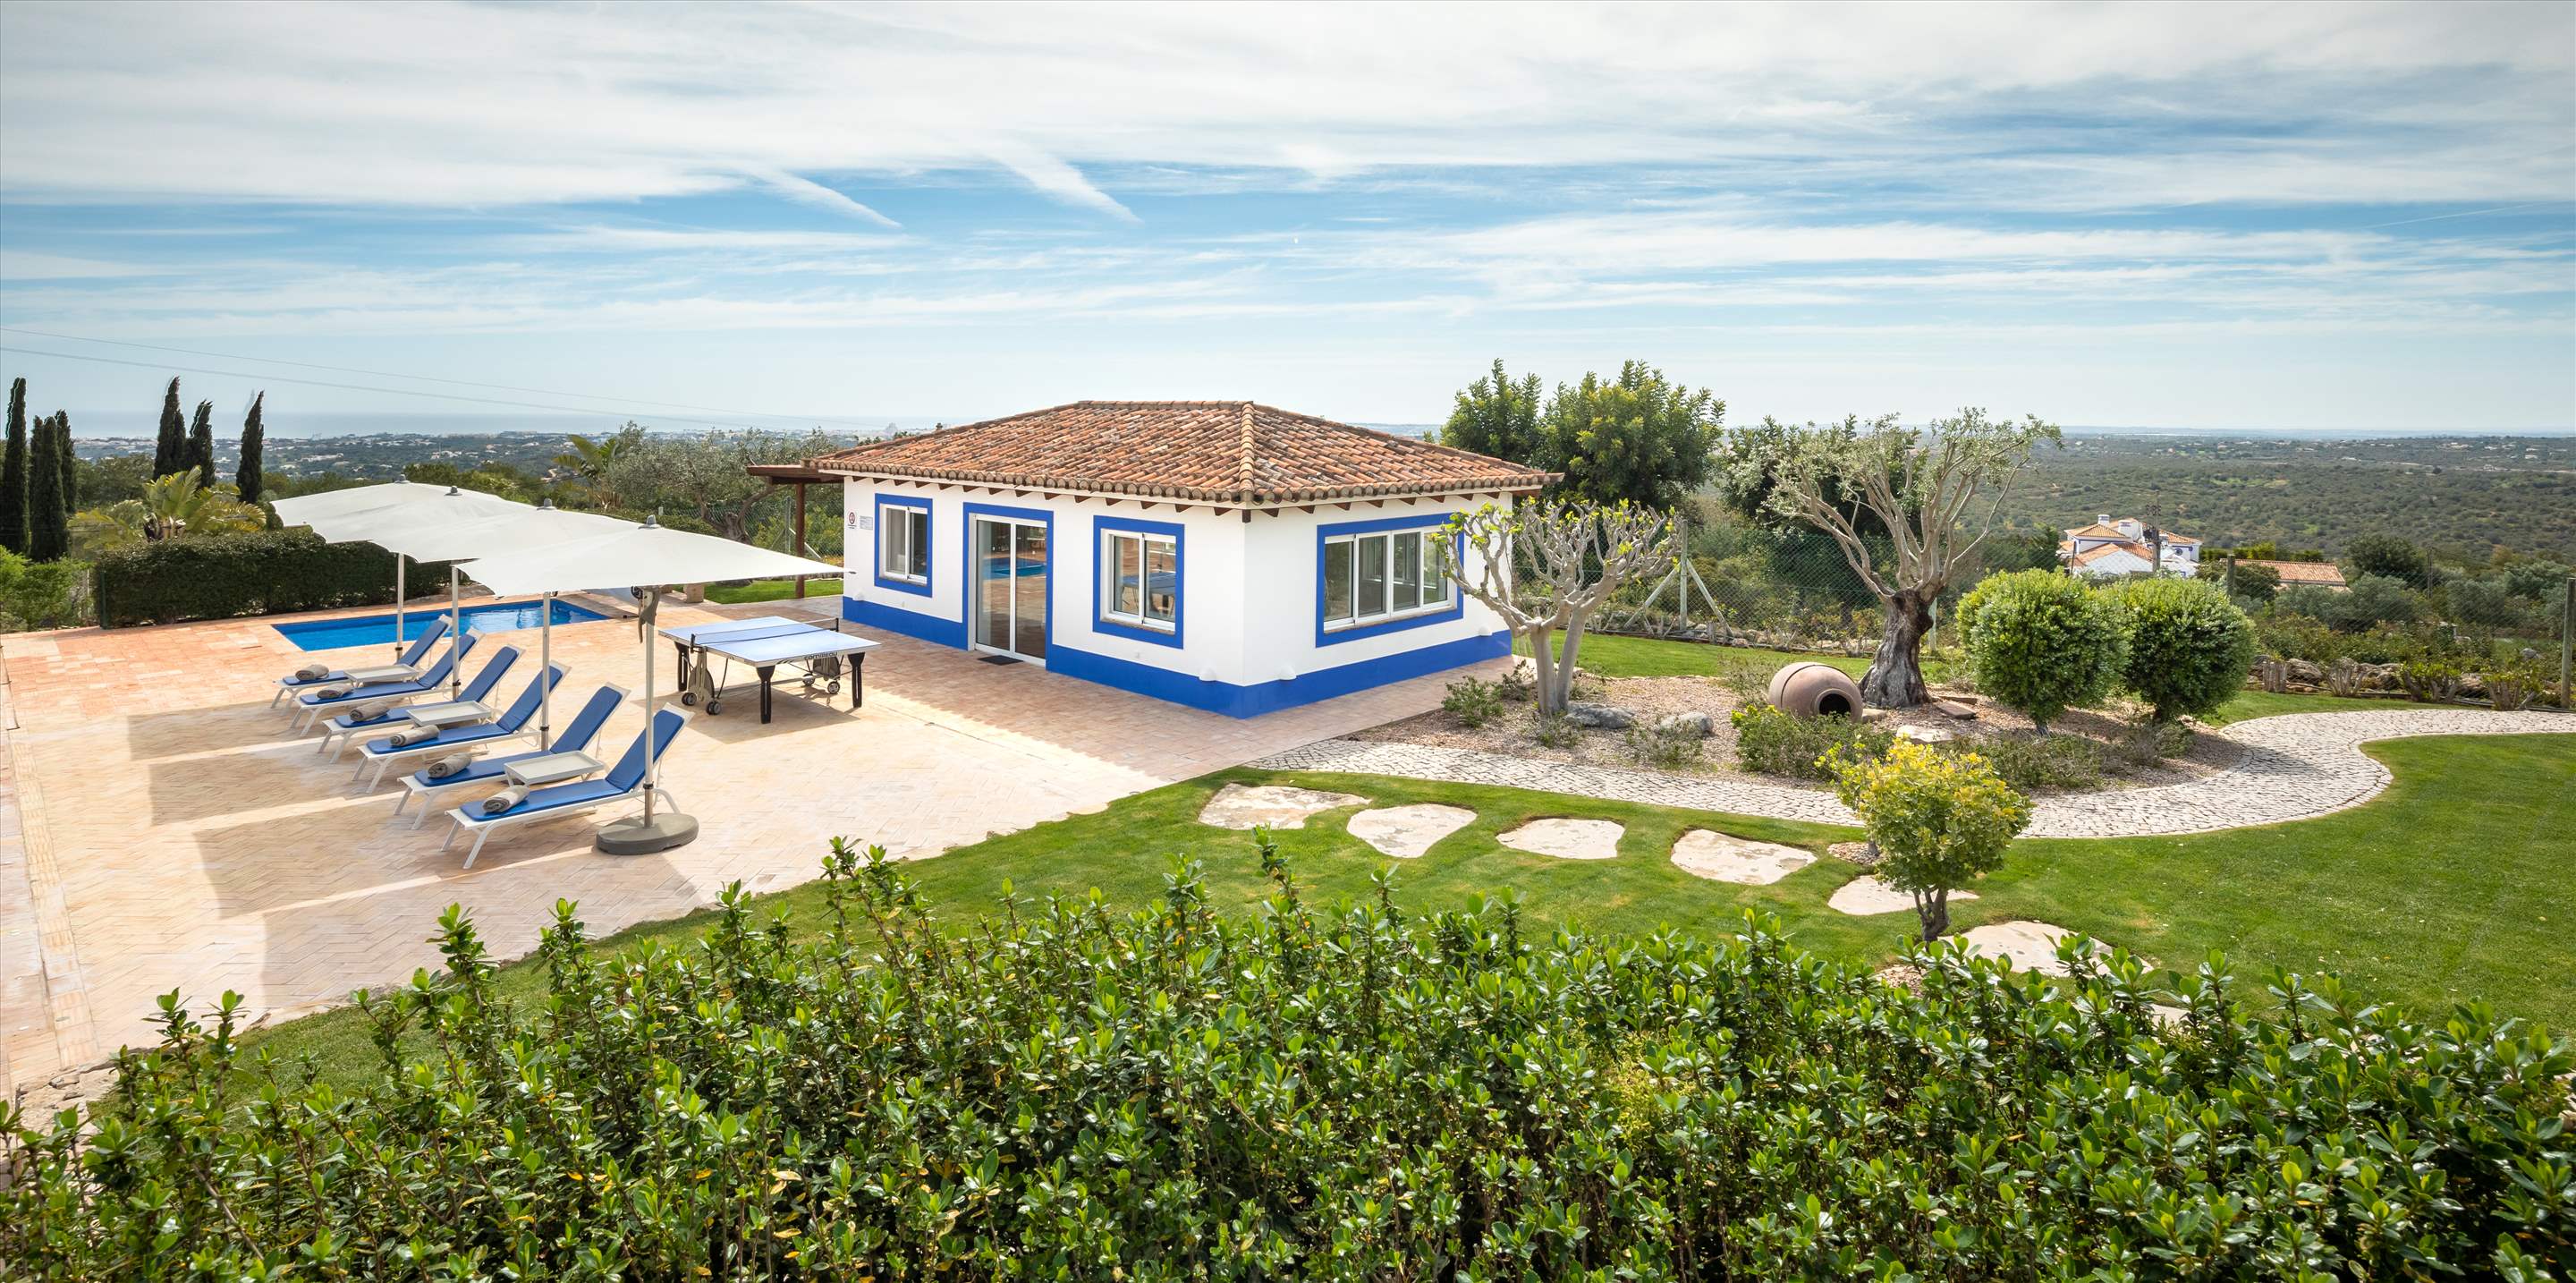 Casa da Montanha, up to 10 persons, 5 bedroom villa in Vilamoura Area, Algarve Photo #3